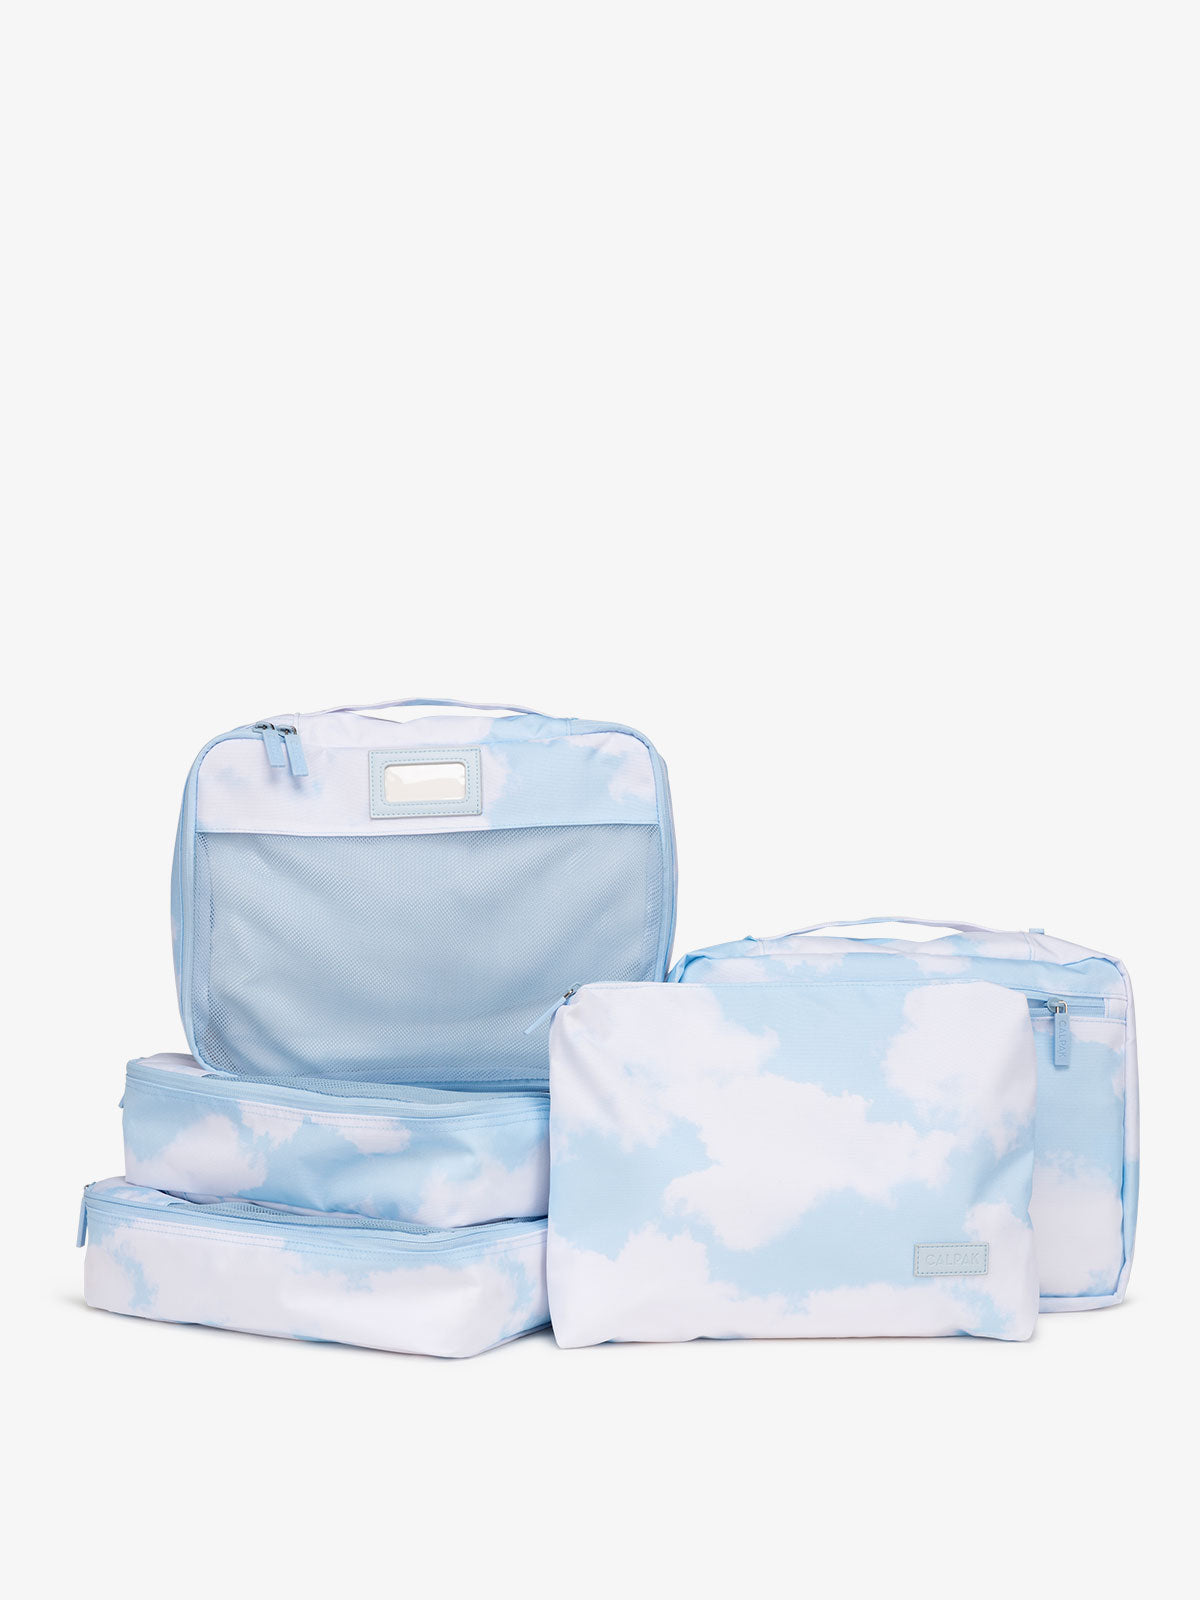 CALPAK packing storage cube for luggage